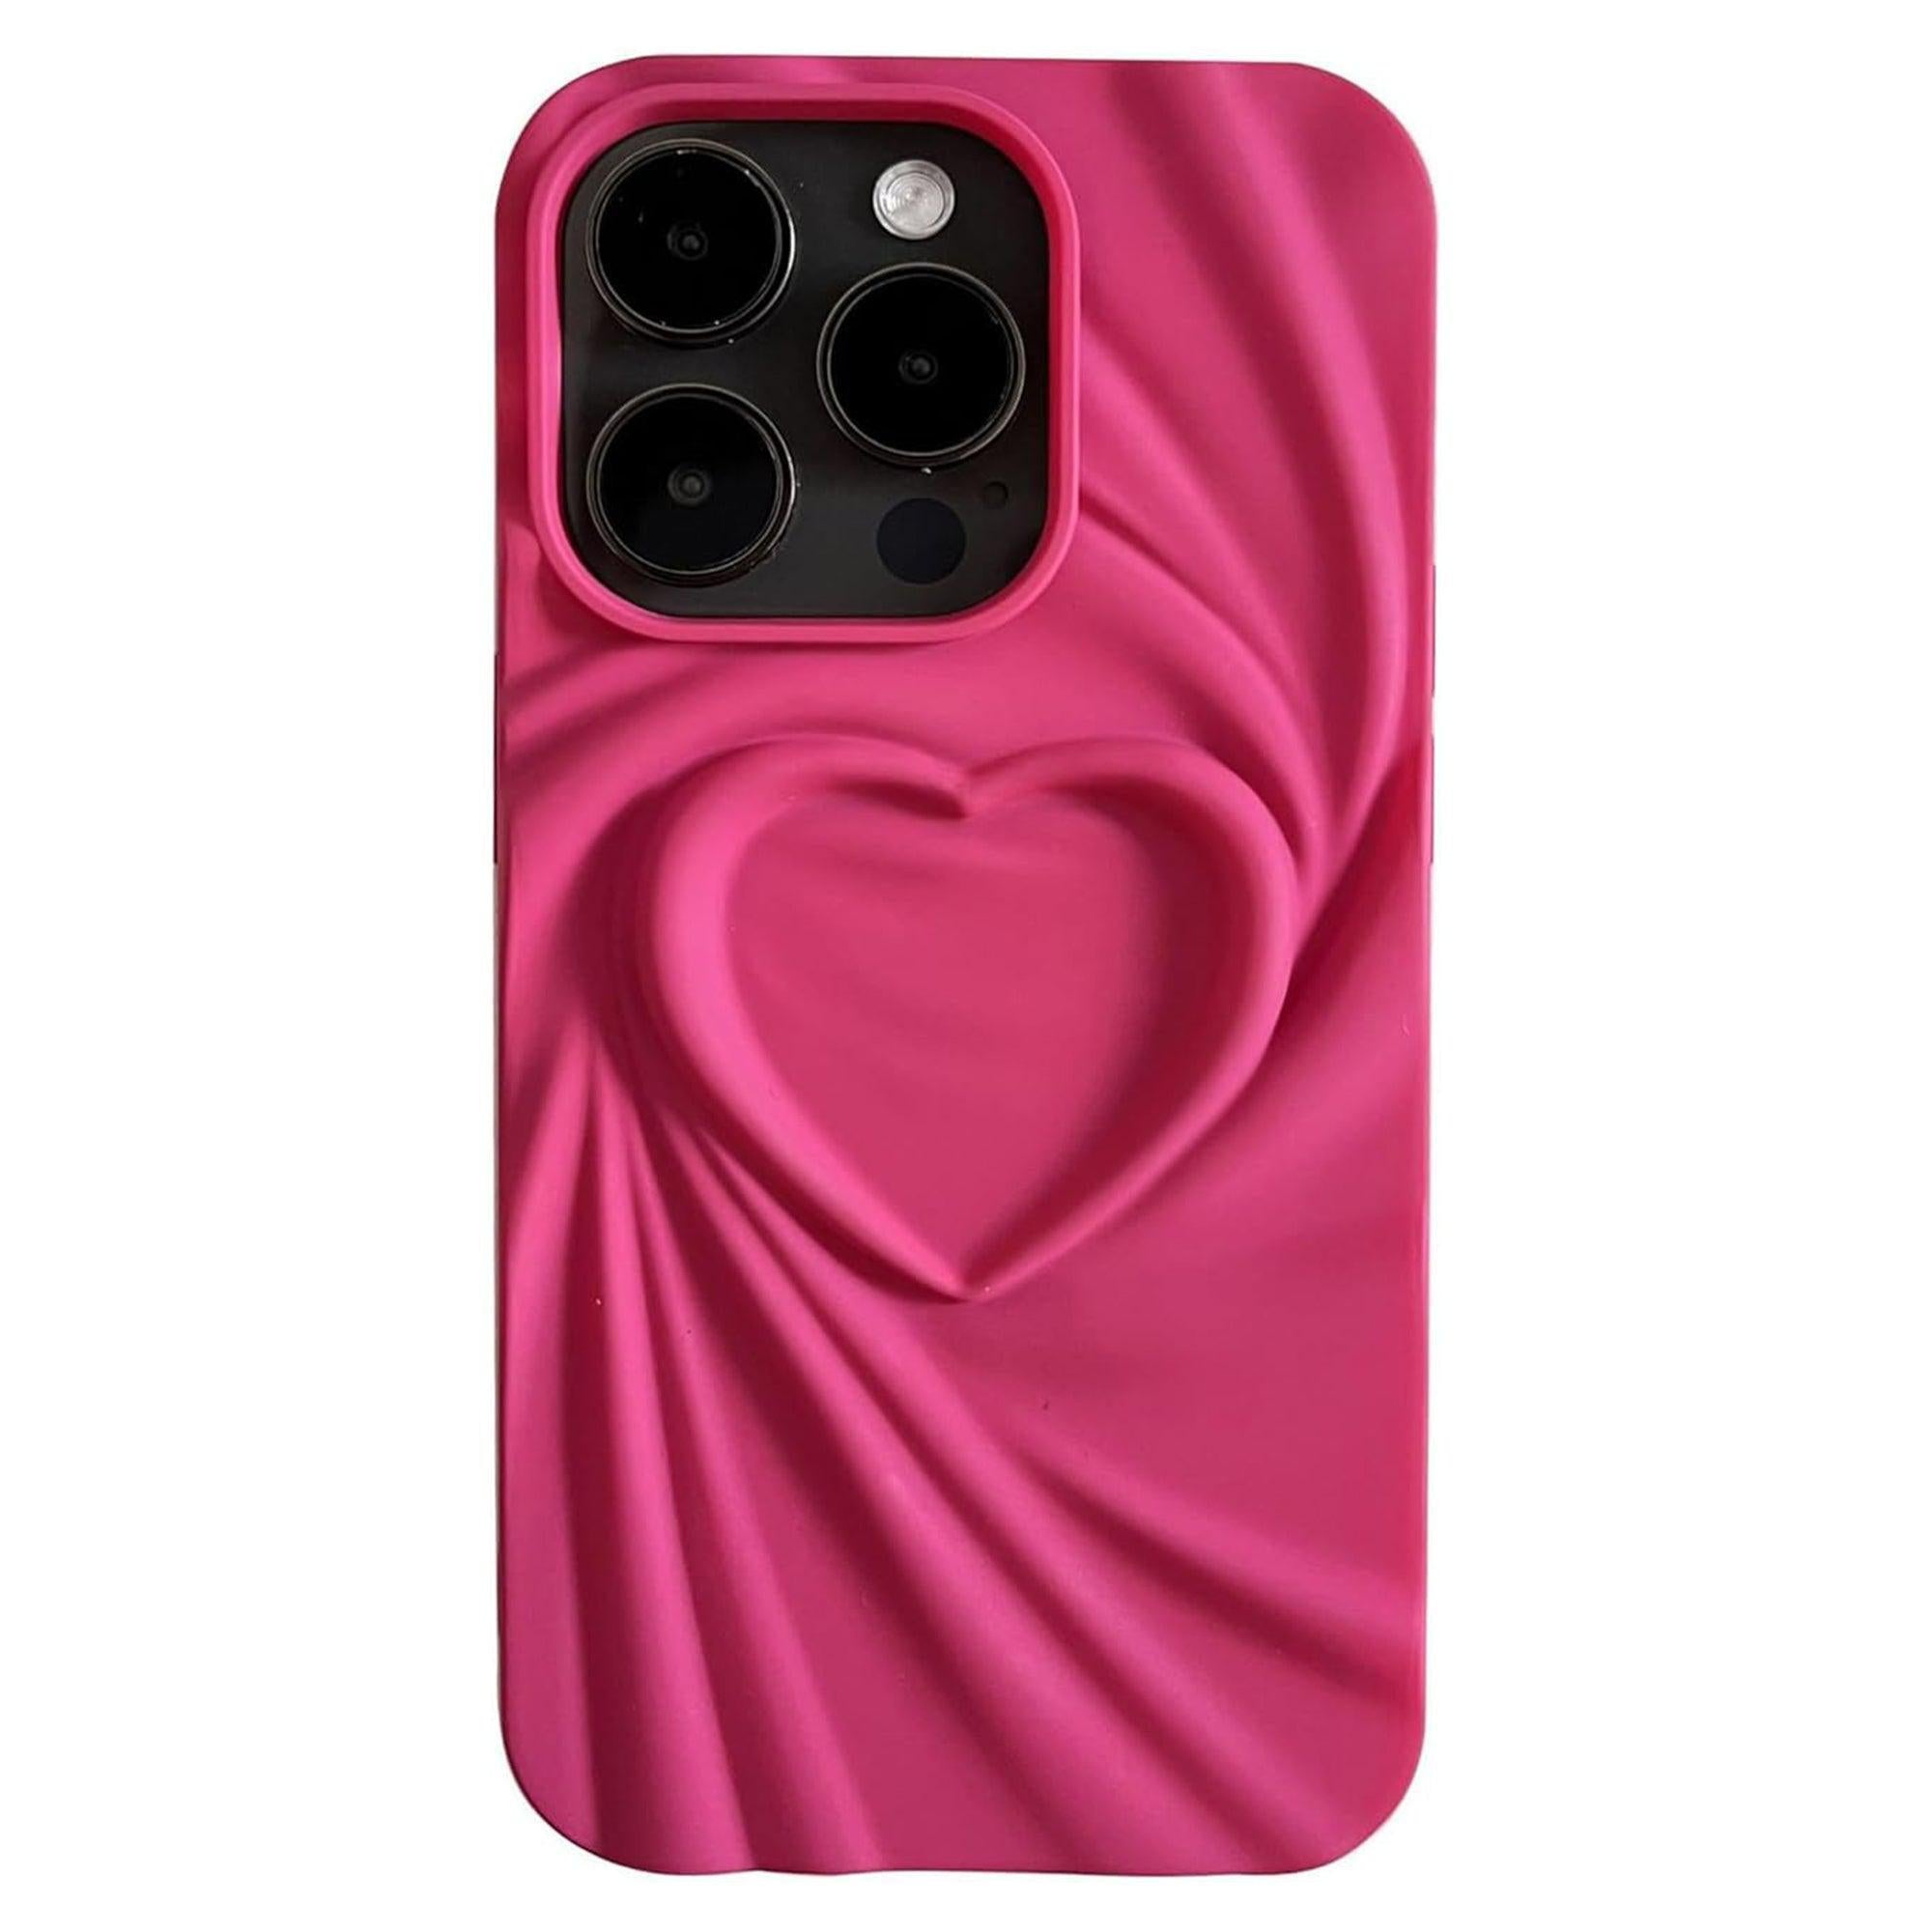 3D Heart Pattern iPhone Case